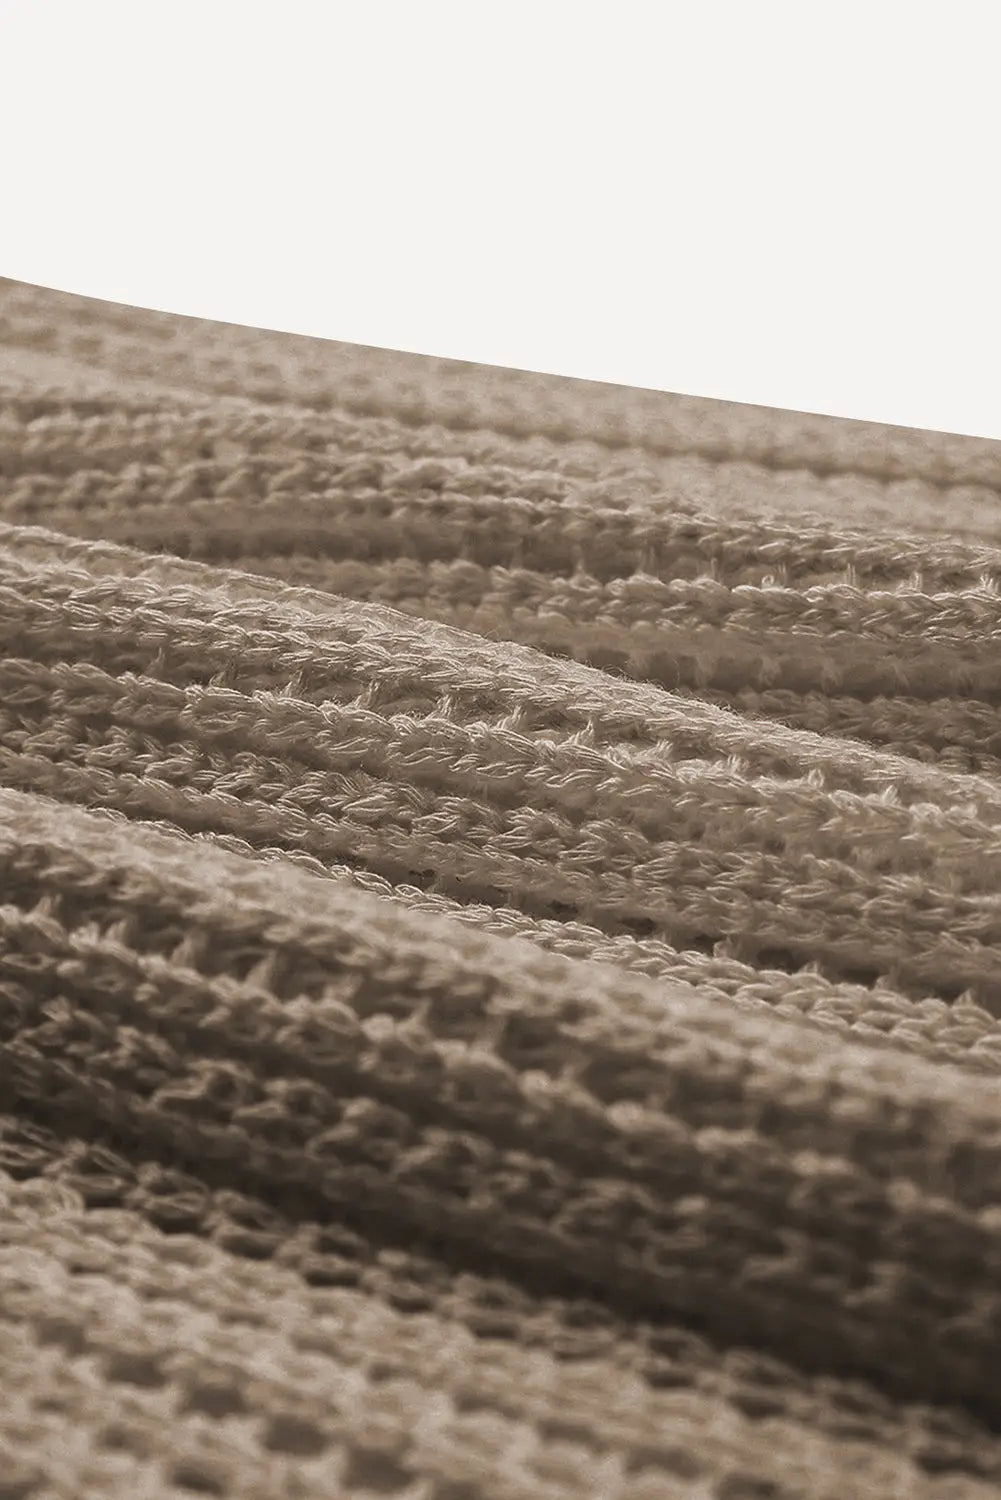 Khaki hollowed knit v neck tank top - tops